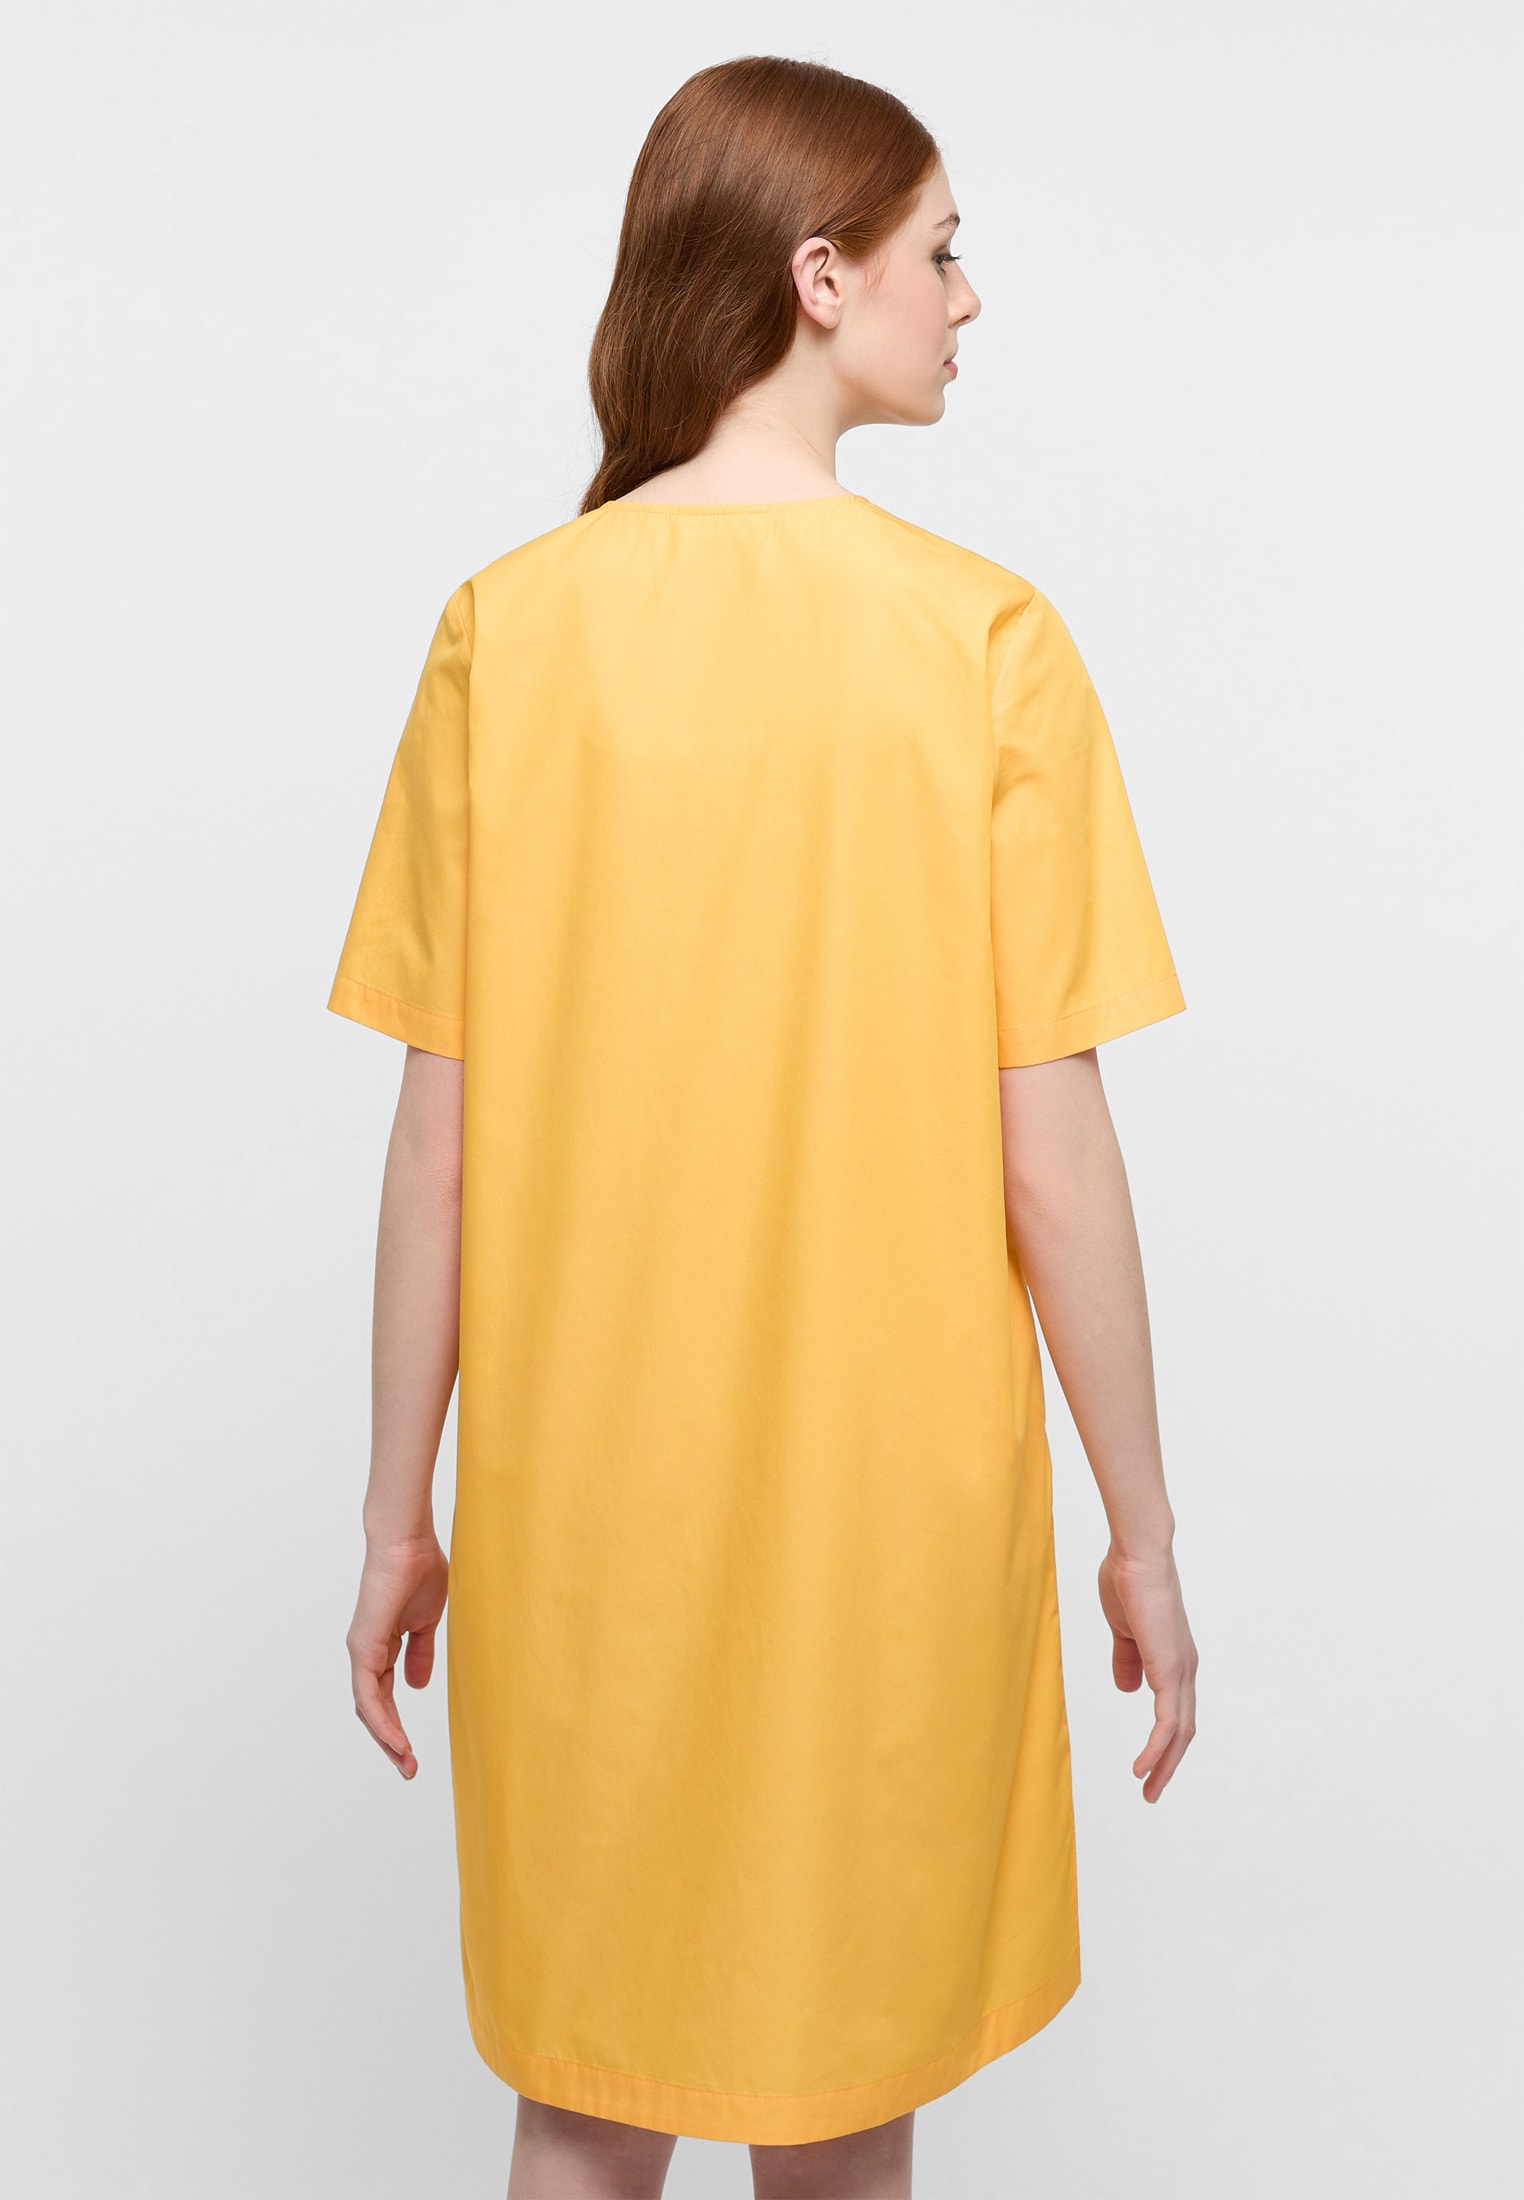 42 short Shirt plain | mandarin mandarin | in dress 2DR00211-08-21-42-1/2 | sleeve |